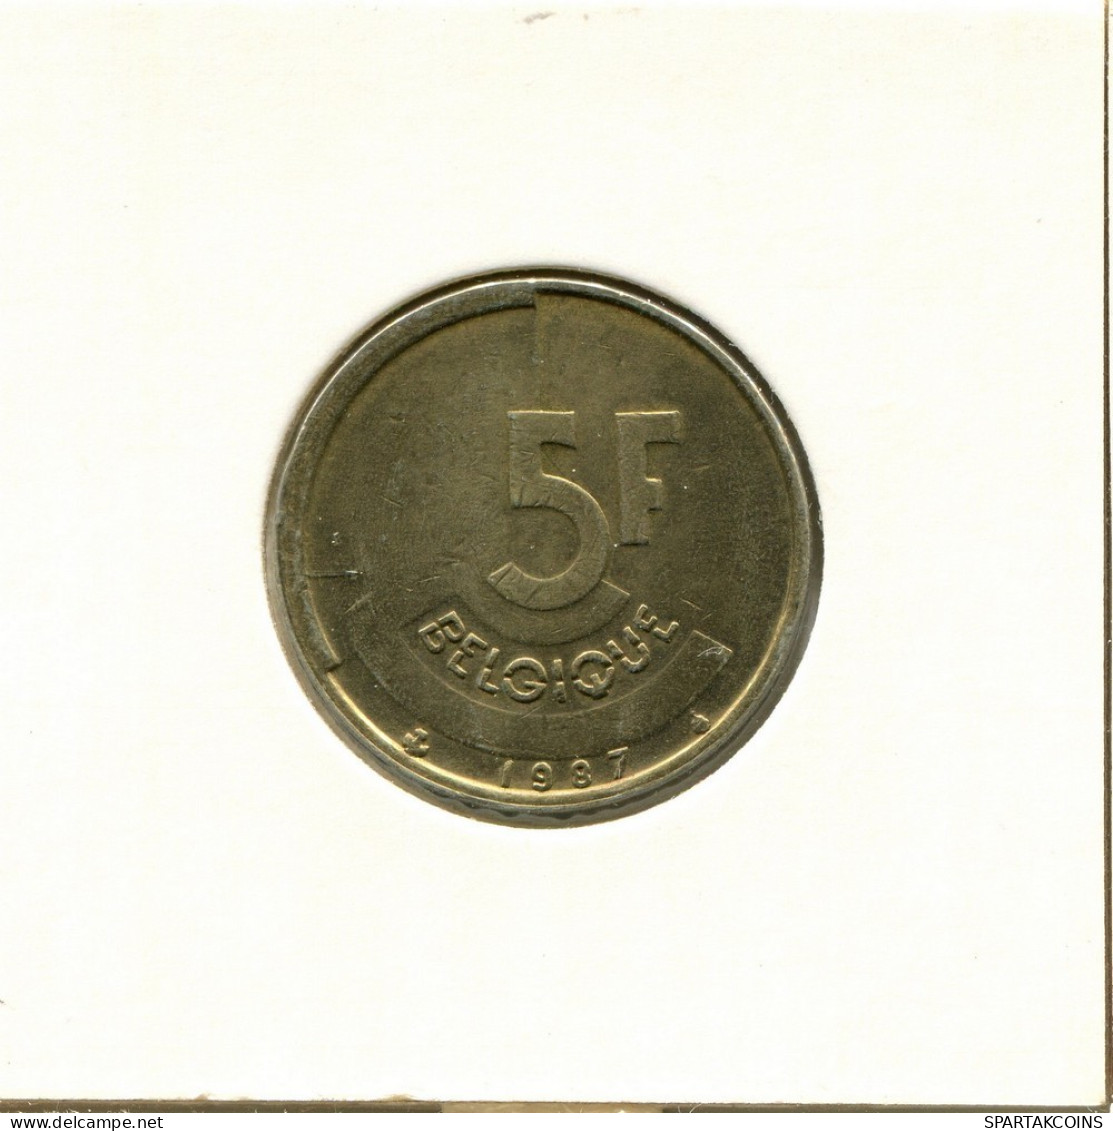 5 FRANCS 1987 Französisch Text BELGIEN BELGIUM Münze #BB348.D.A - 5 Francs